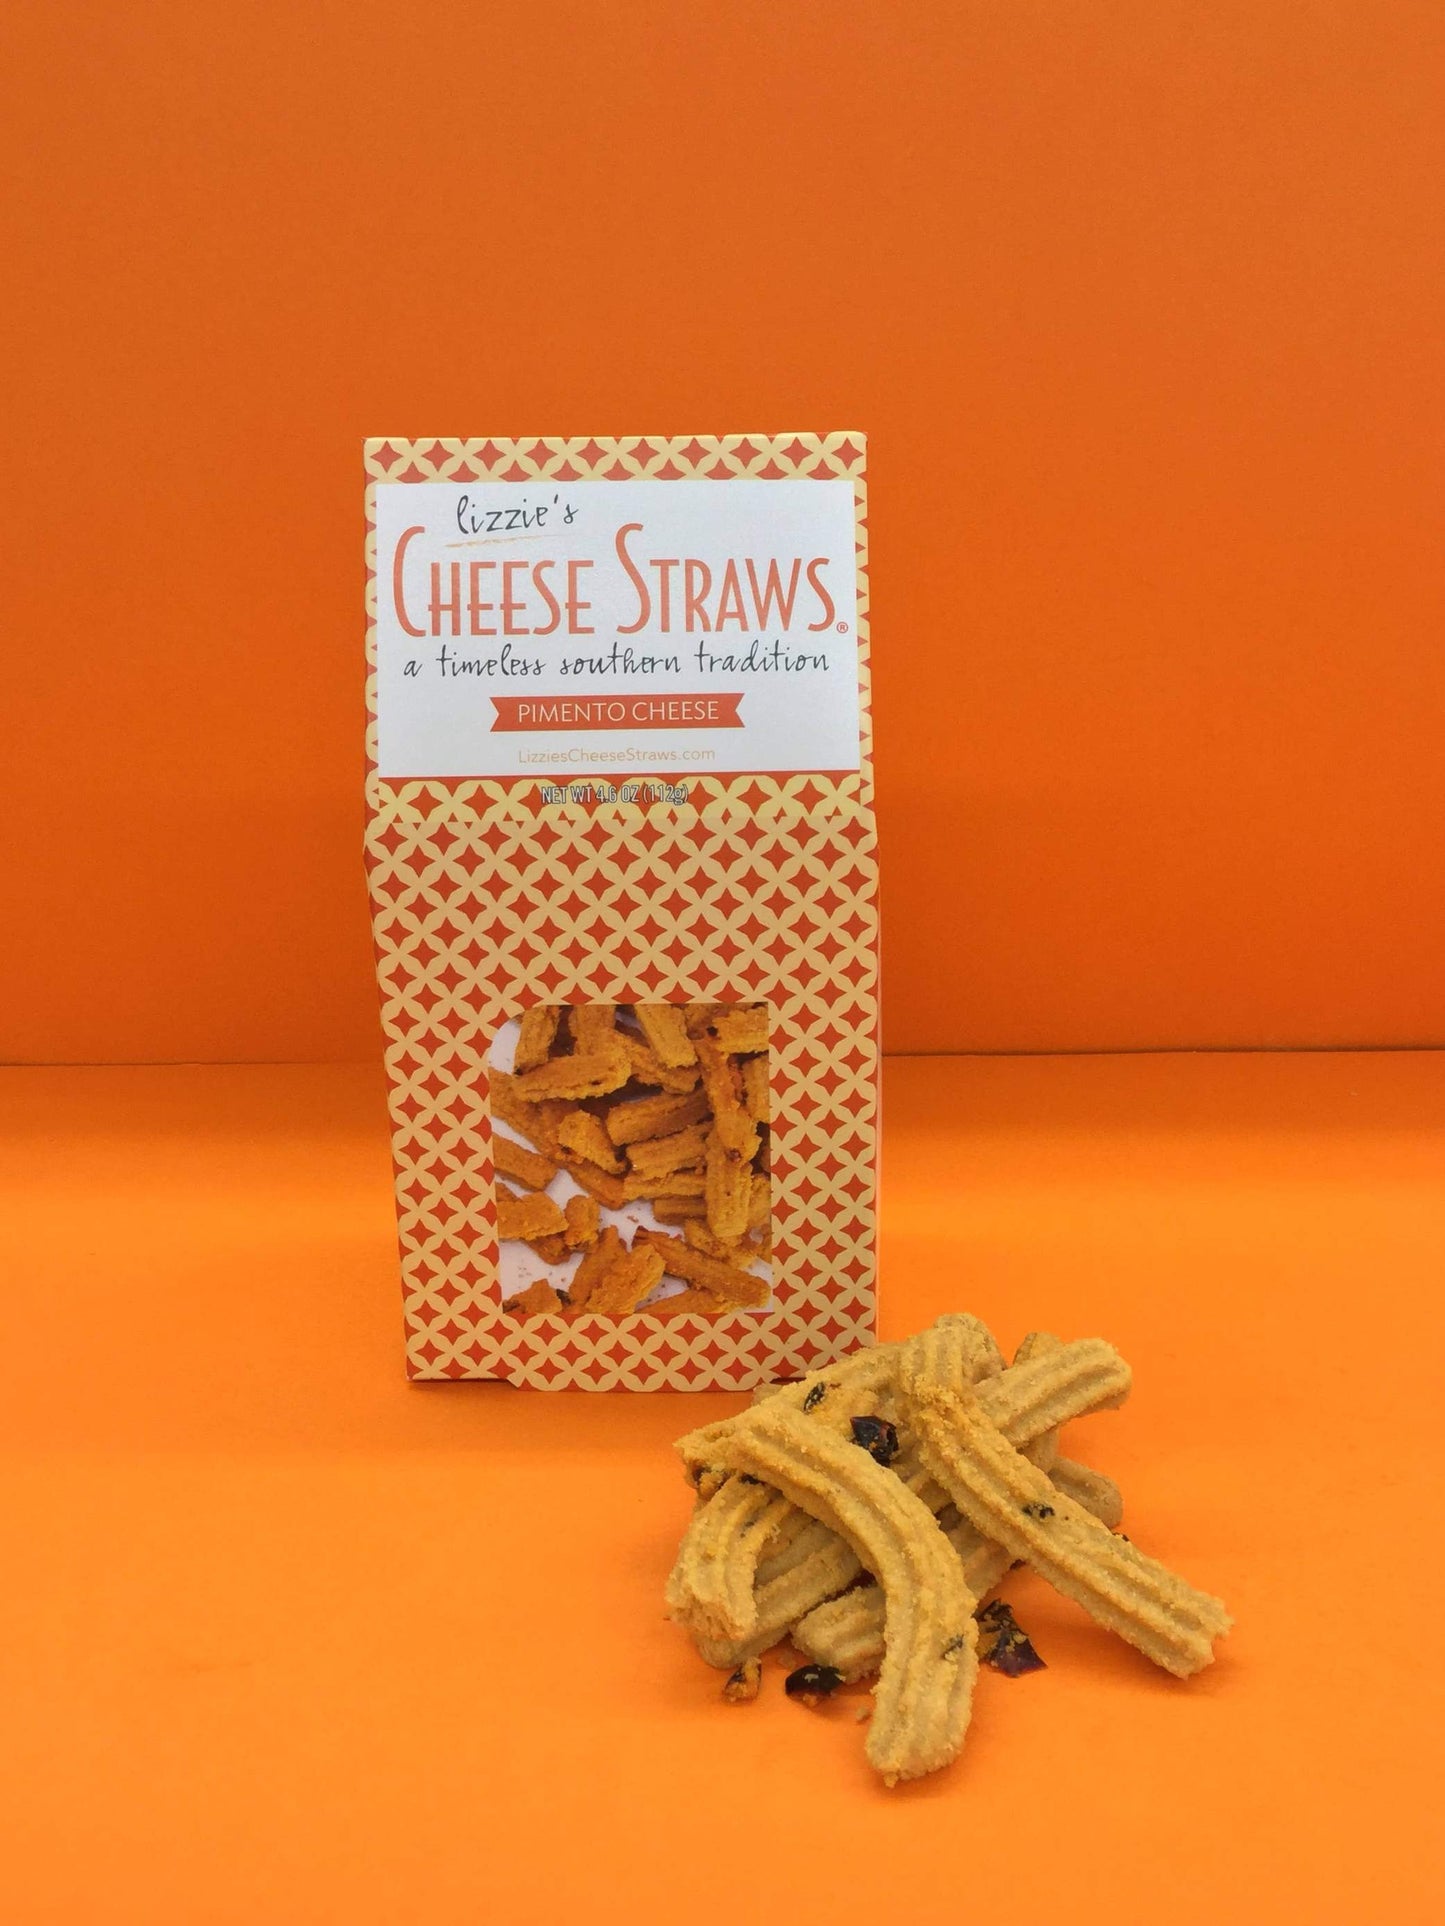 Lizzie's Cheese Straws - Pimento Cheese Straws